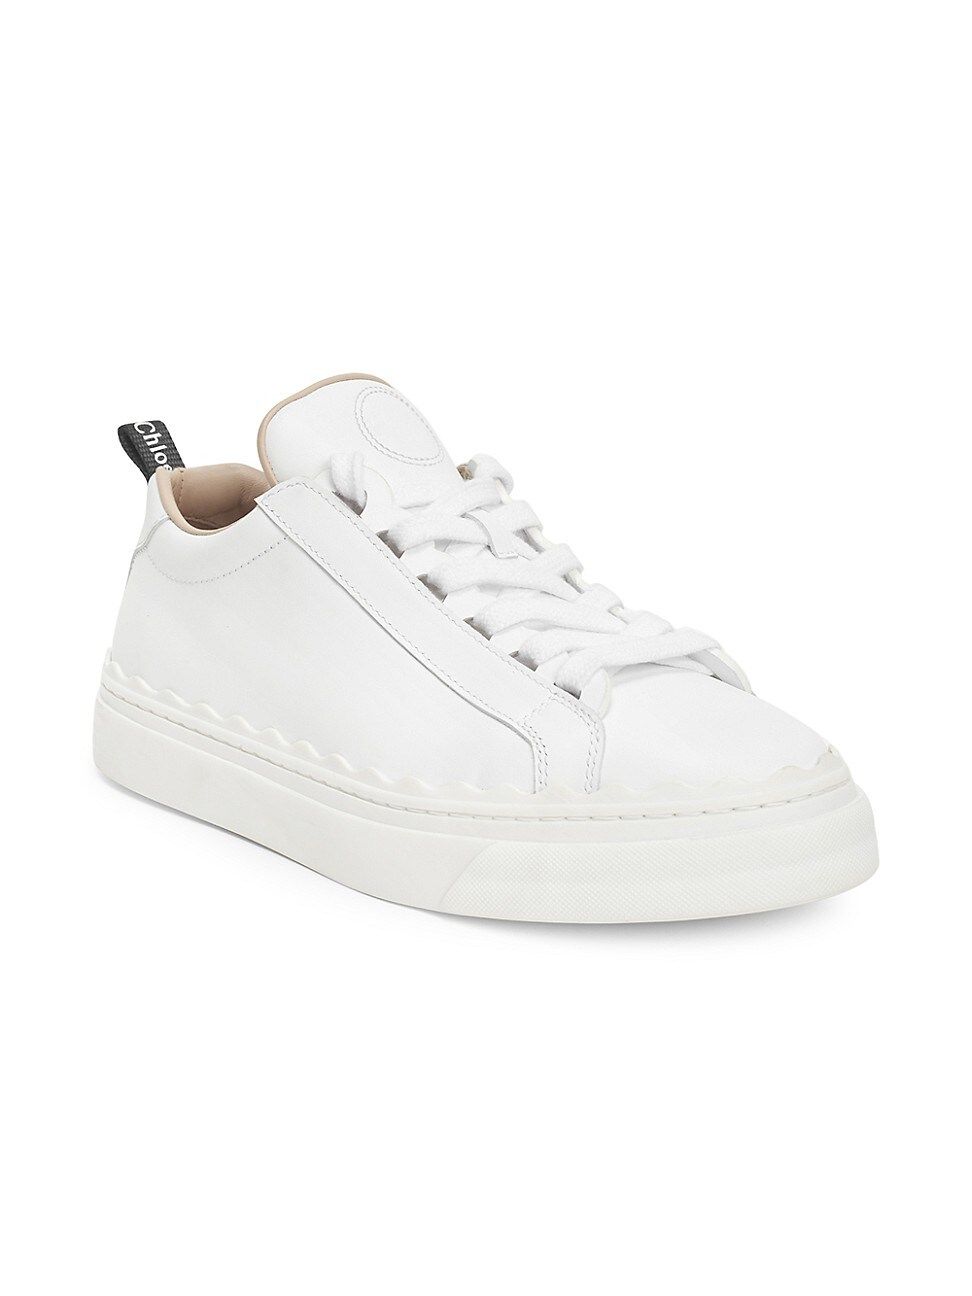 Chloé Women's Lauren Leather Sneakers - White - Size 12 | Saks Fifth Avenue